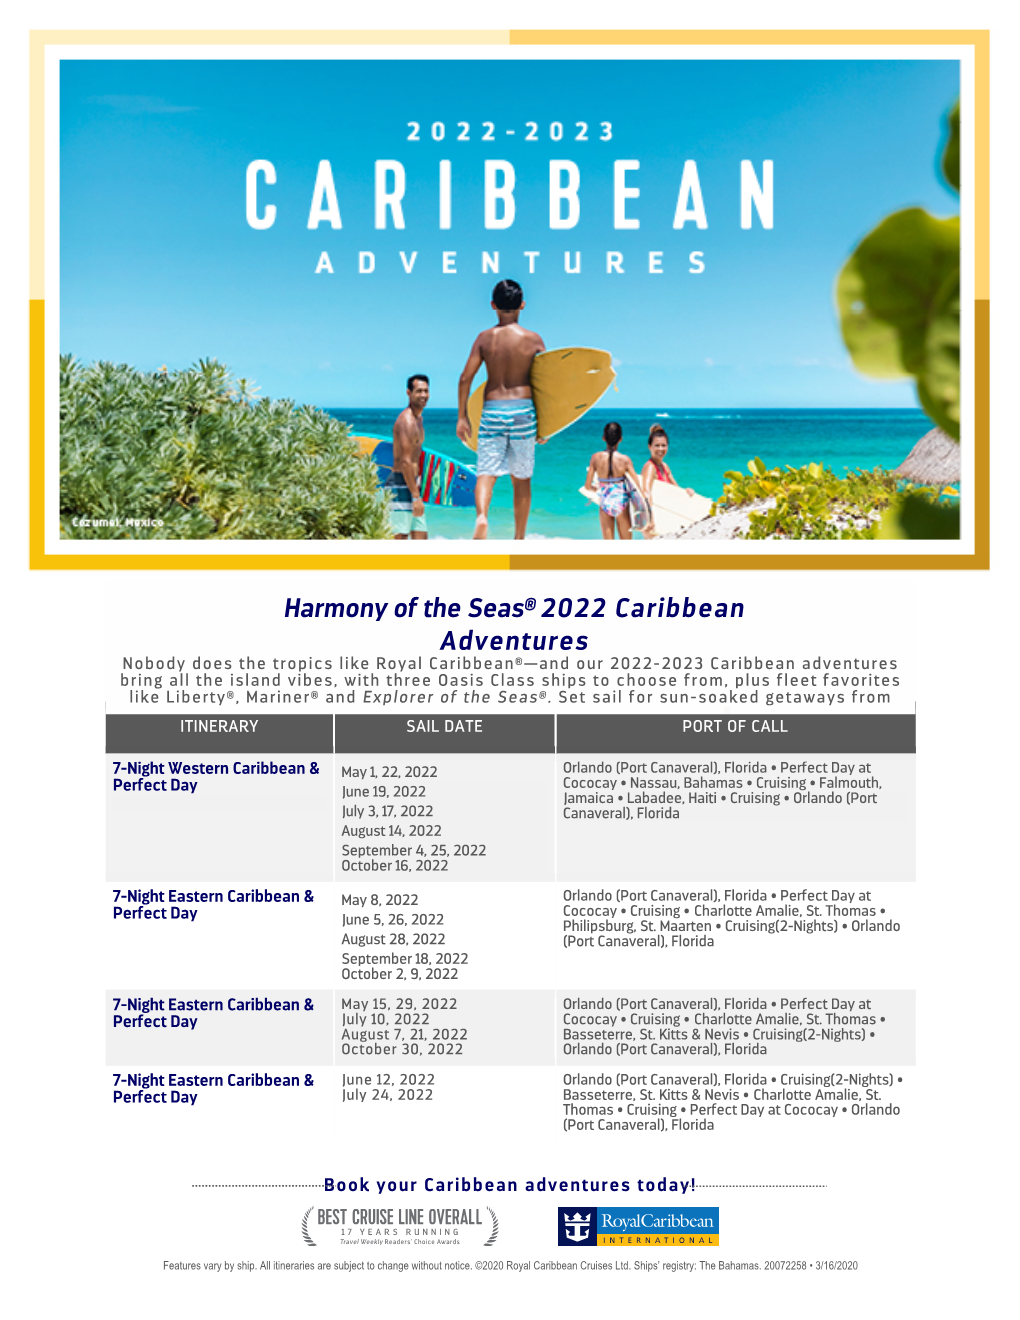 Harmony of the Seas® 2022 Caribbean Adventures